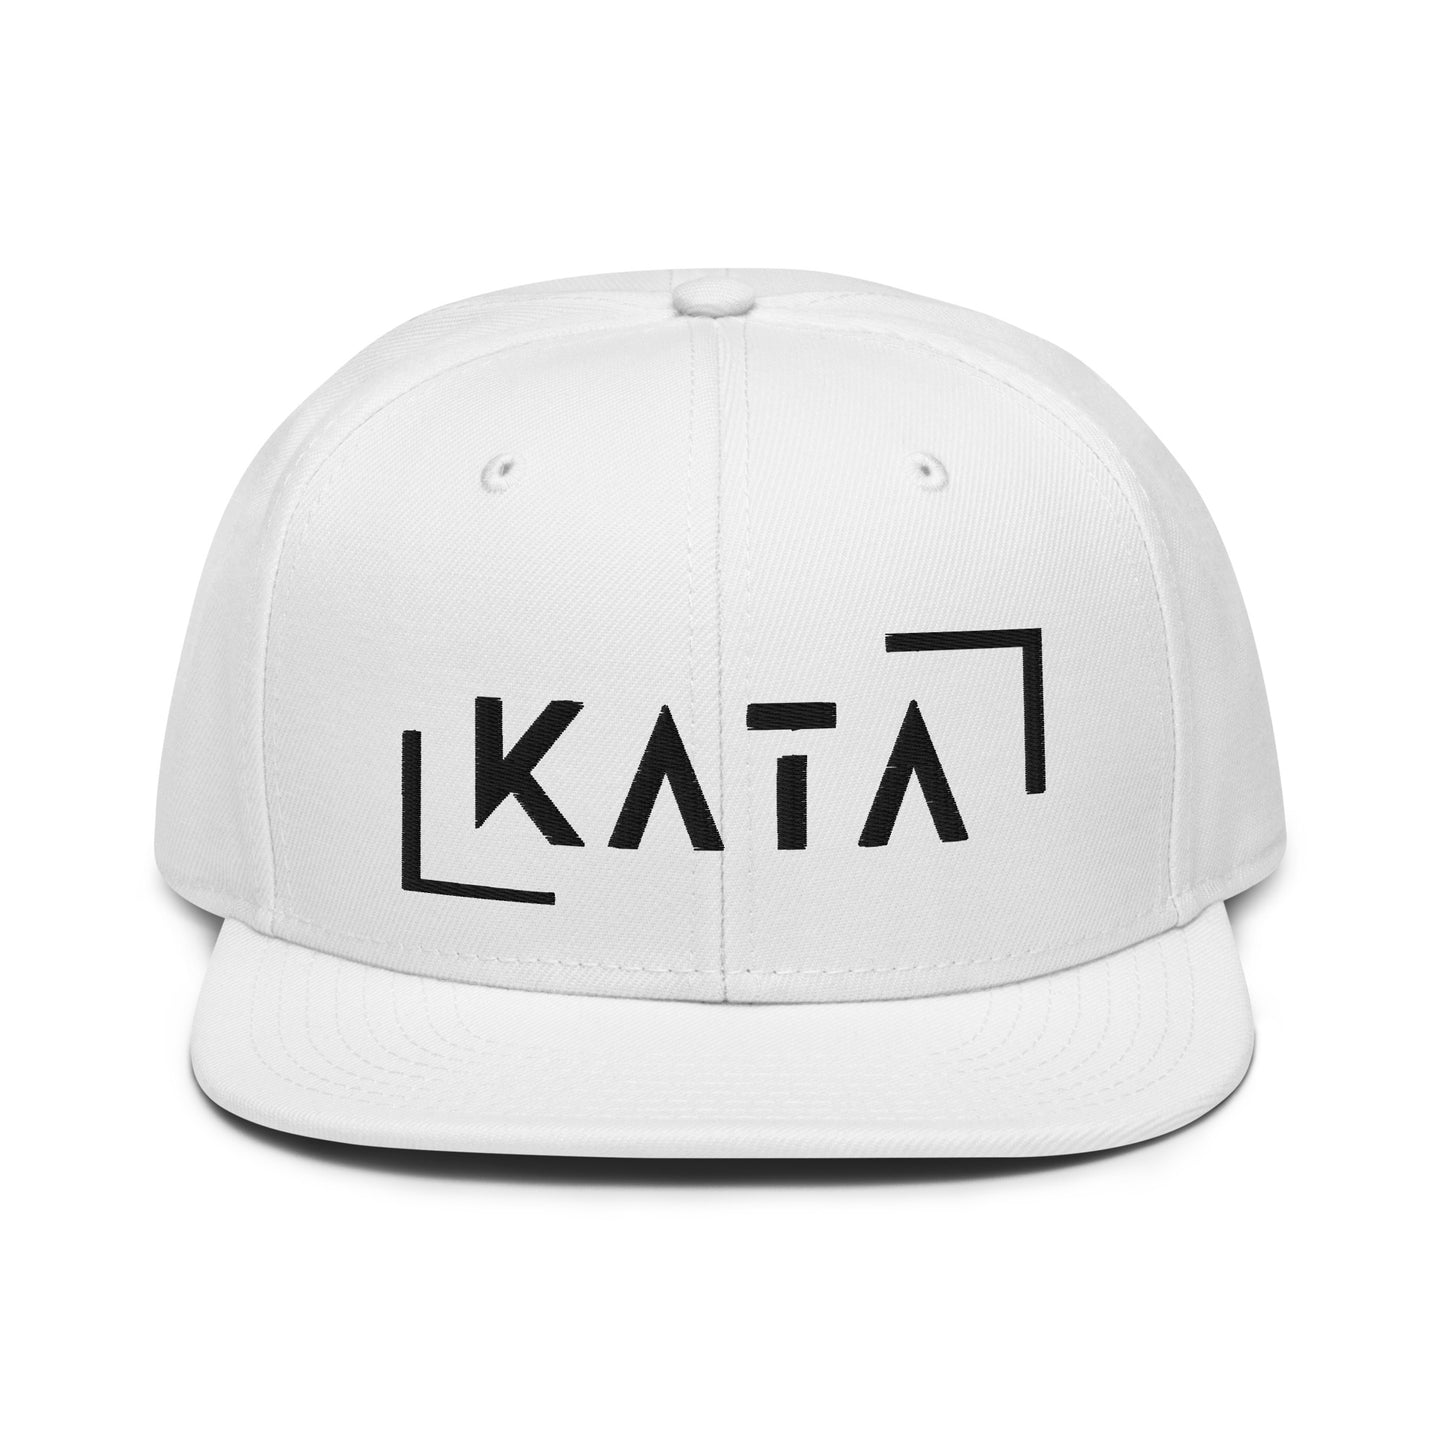 Kata Snapback Hat